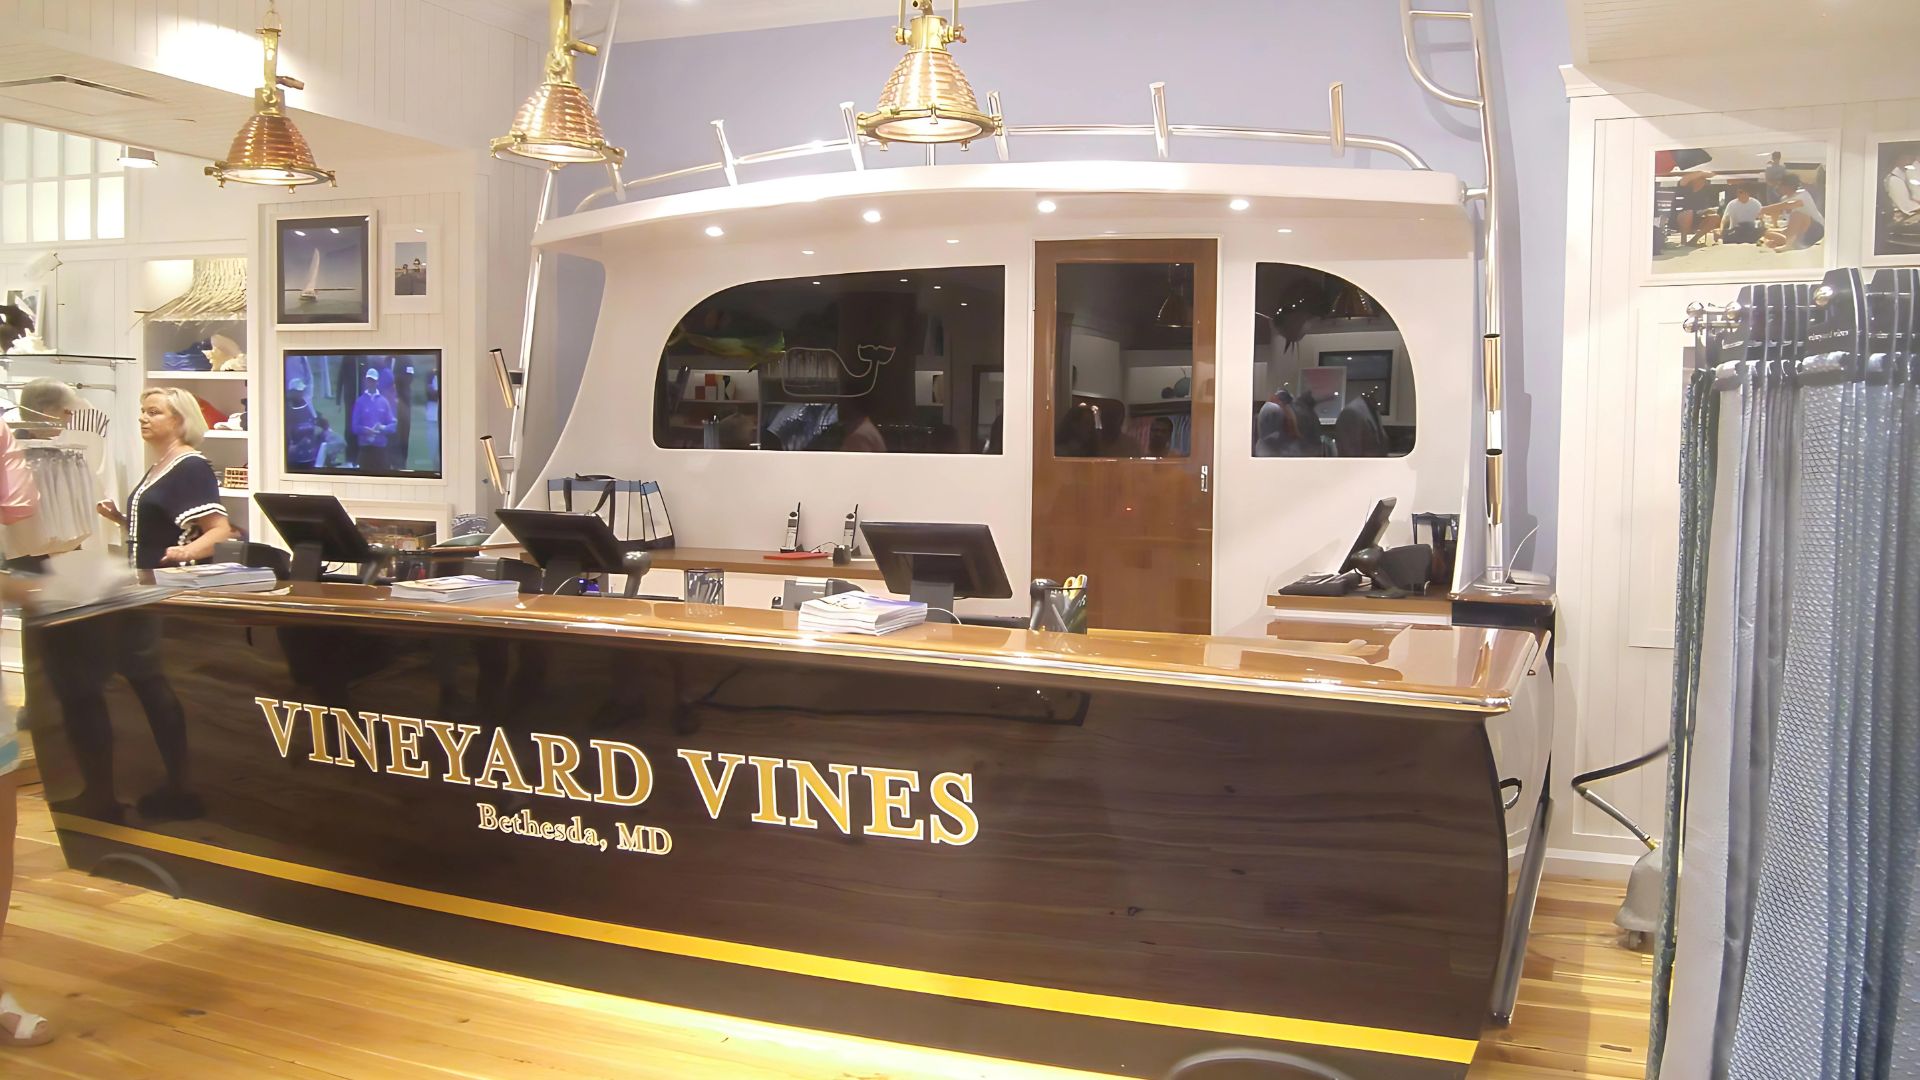 Vineyard-Vines-Bethesda-MD-Sales-Floor-cashier-Clothing-boat.jpg